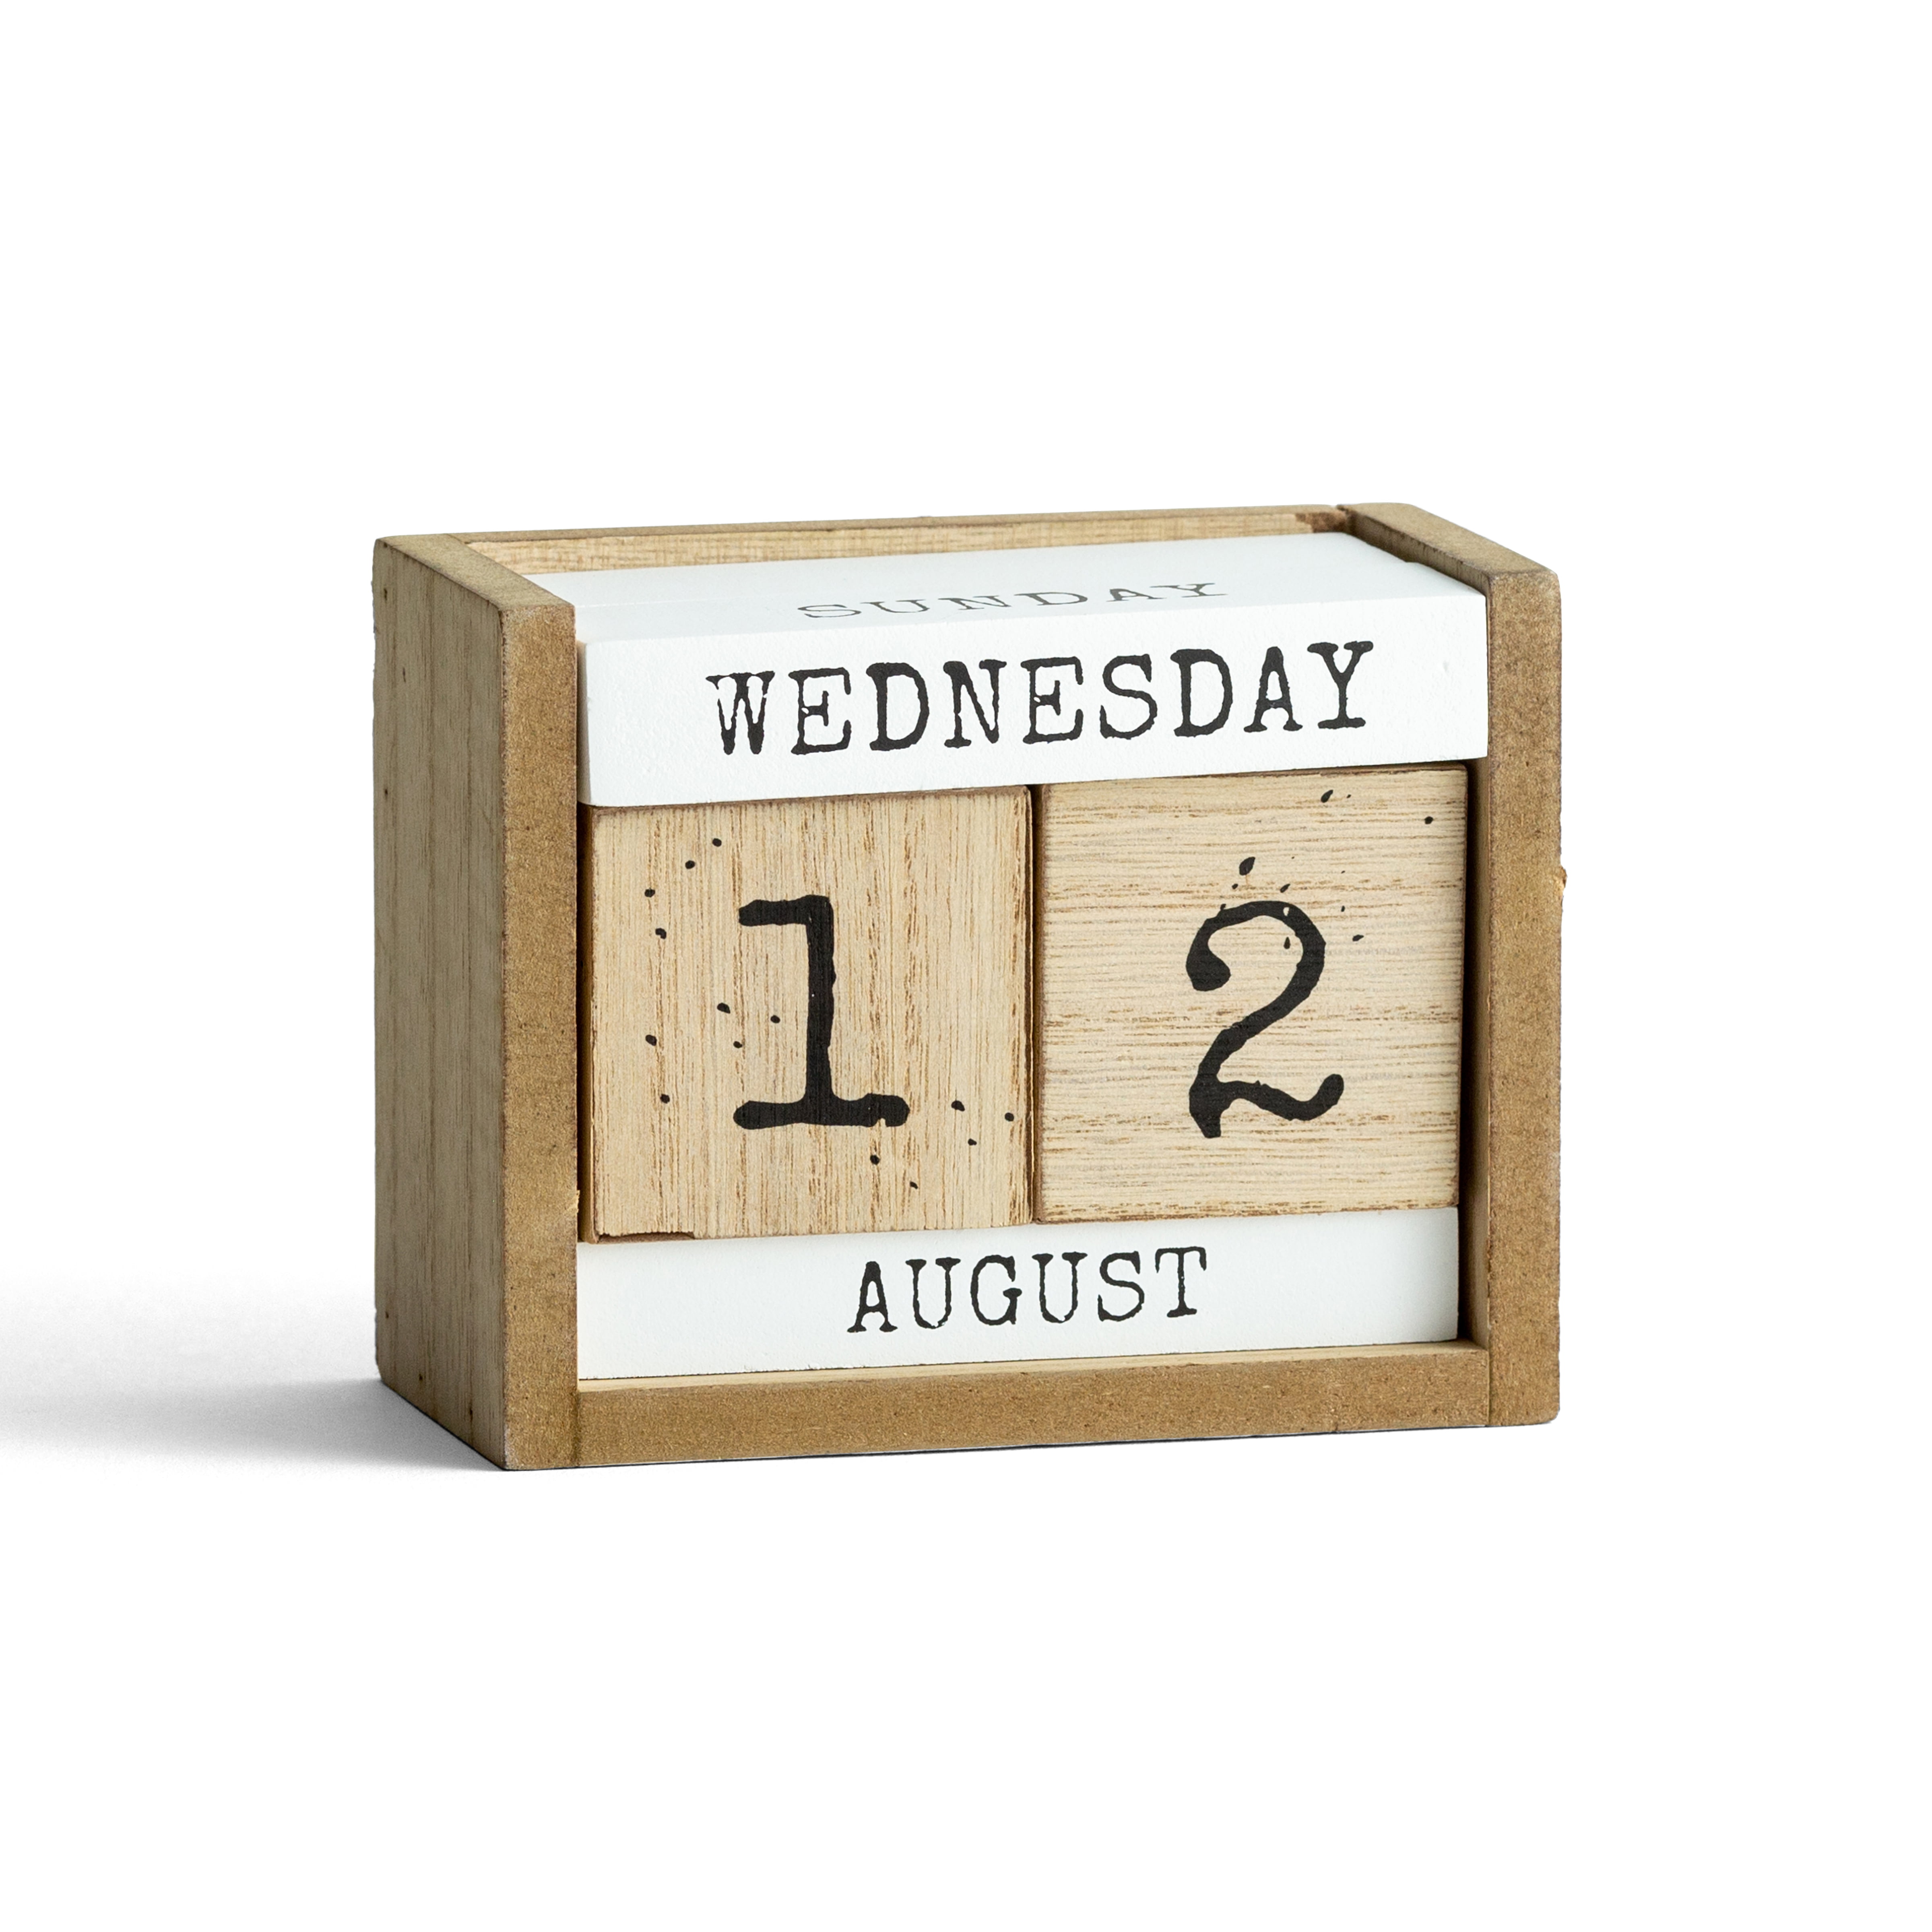 Dayspring Katygirl Wooden Block, Wooden Mail Organizer Desktop With Block Calendar